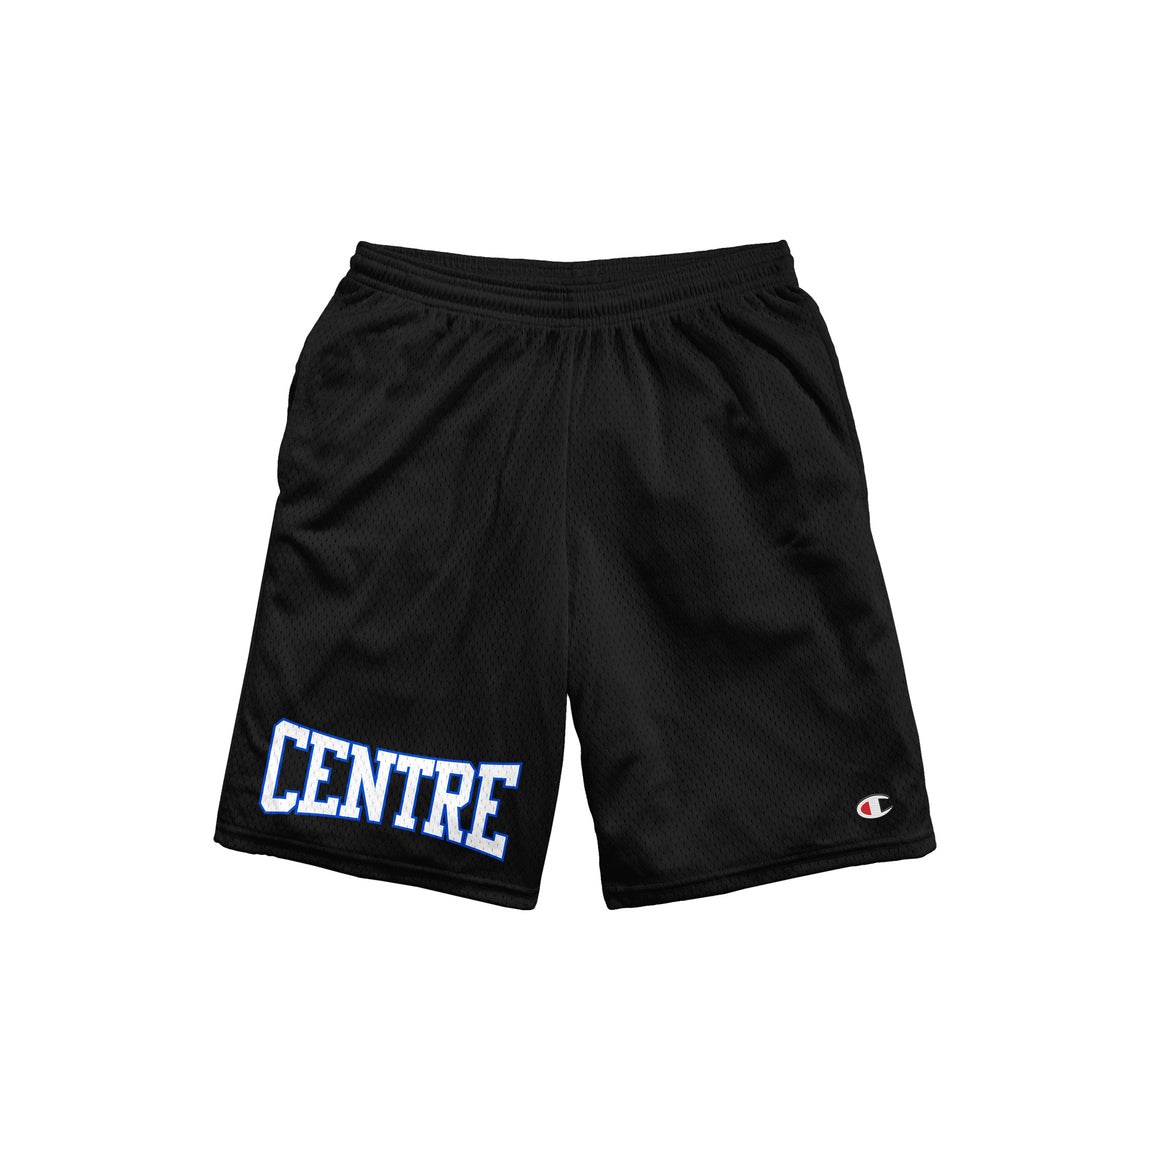 Centre Gridiron Shorts (Black) - Centre Gridiron Shorts (Black) - 